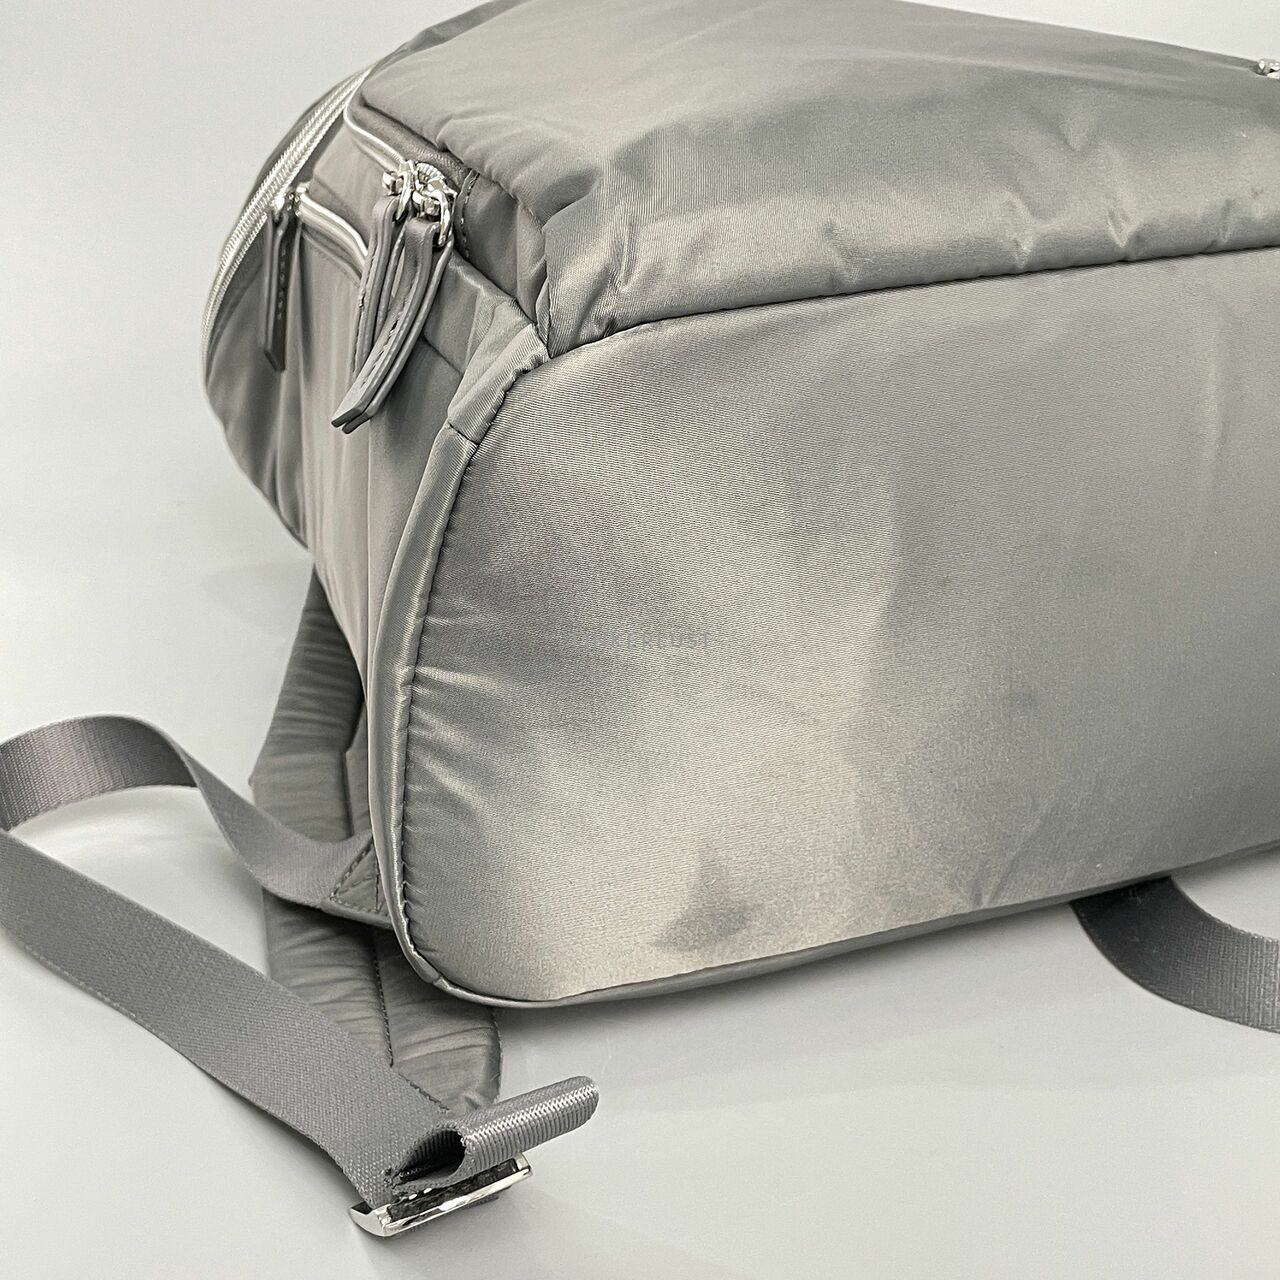 Samsonite Grey Backpack